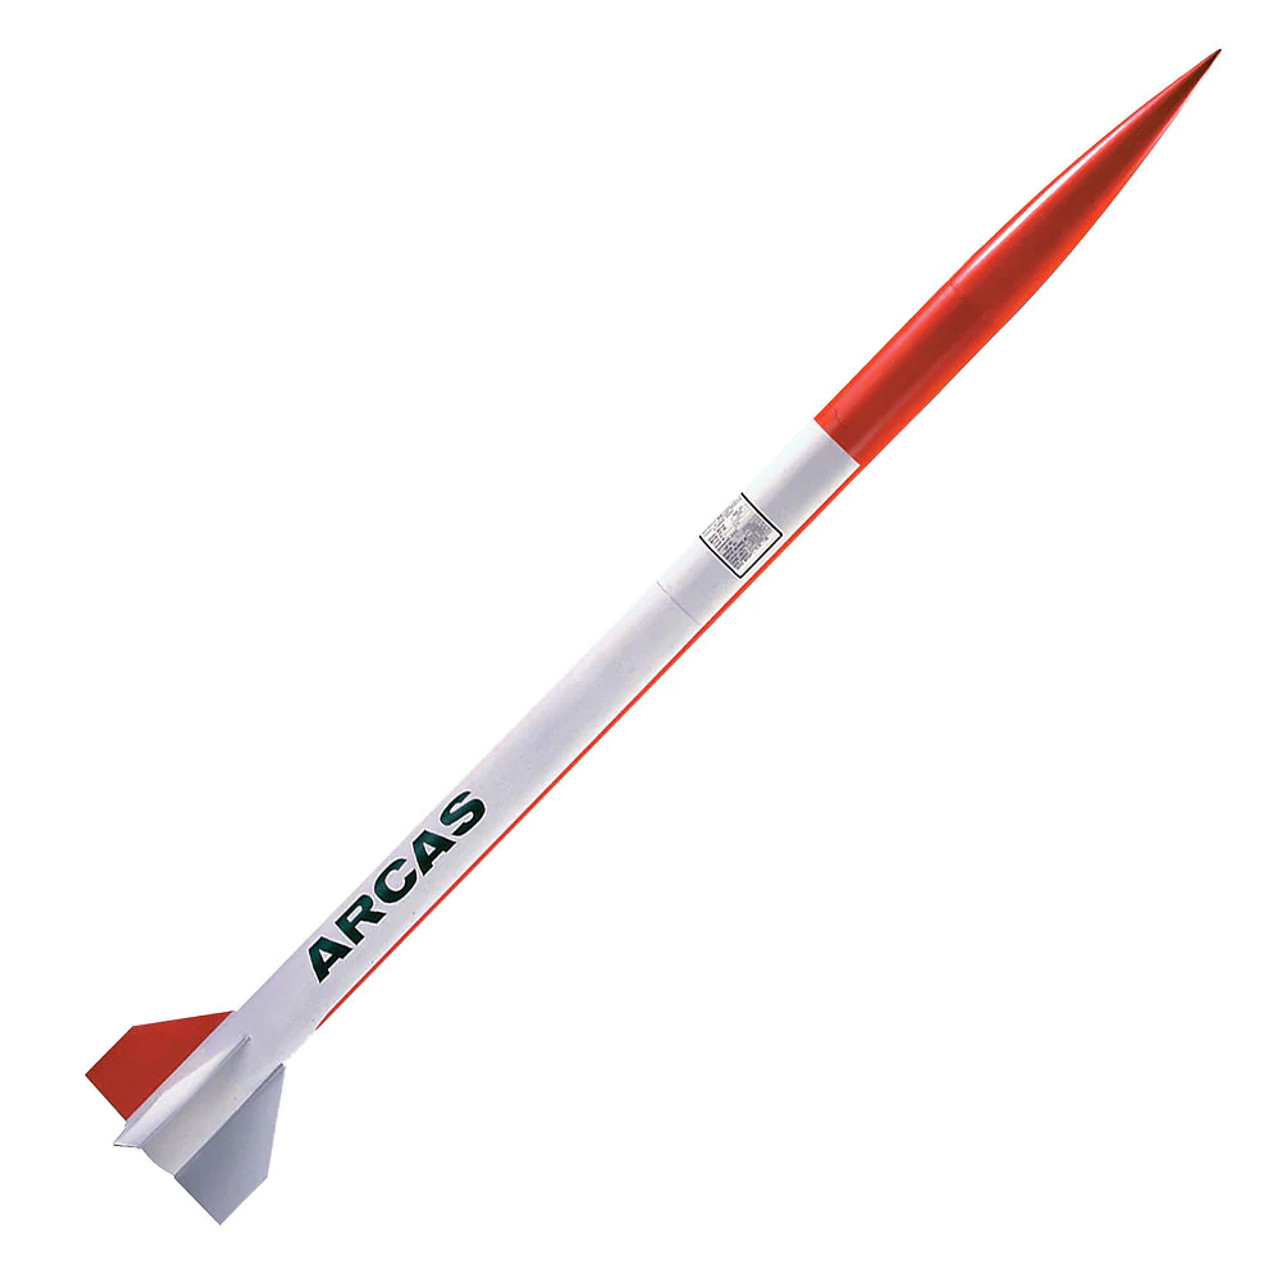 Enerjet by AeroTech HV Arcas Mid-Power Rocket Kit - 89012